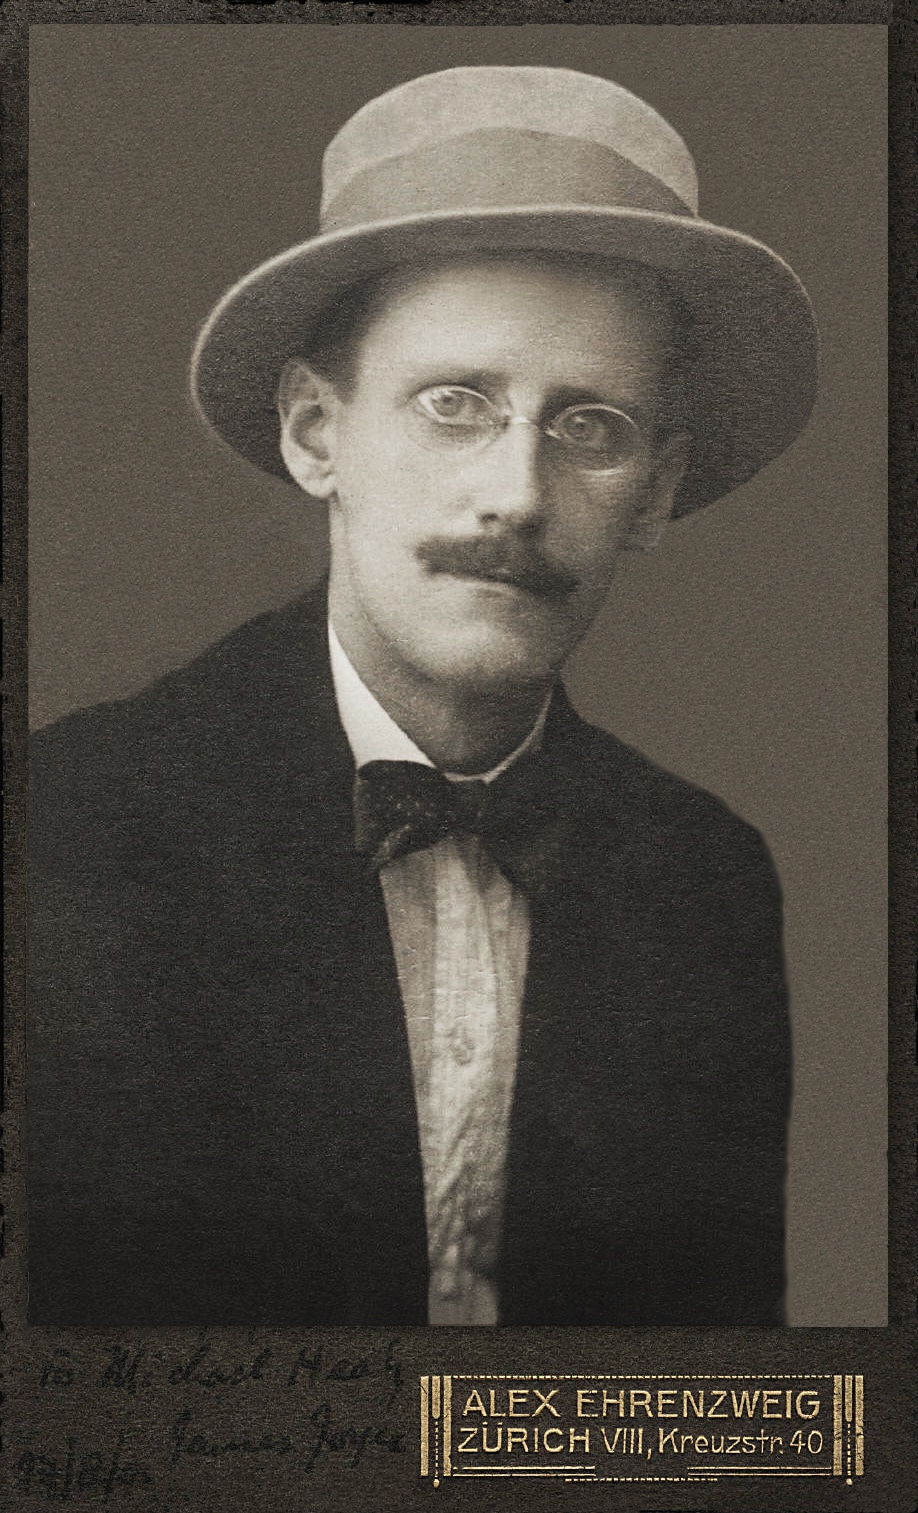 James Joyce in 1915